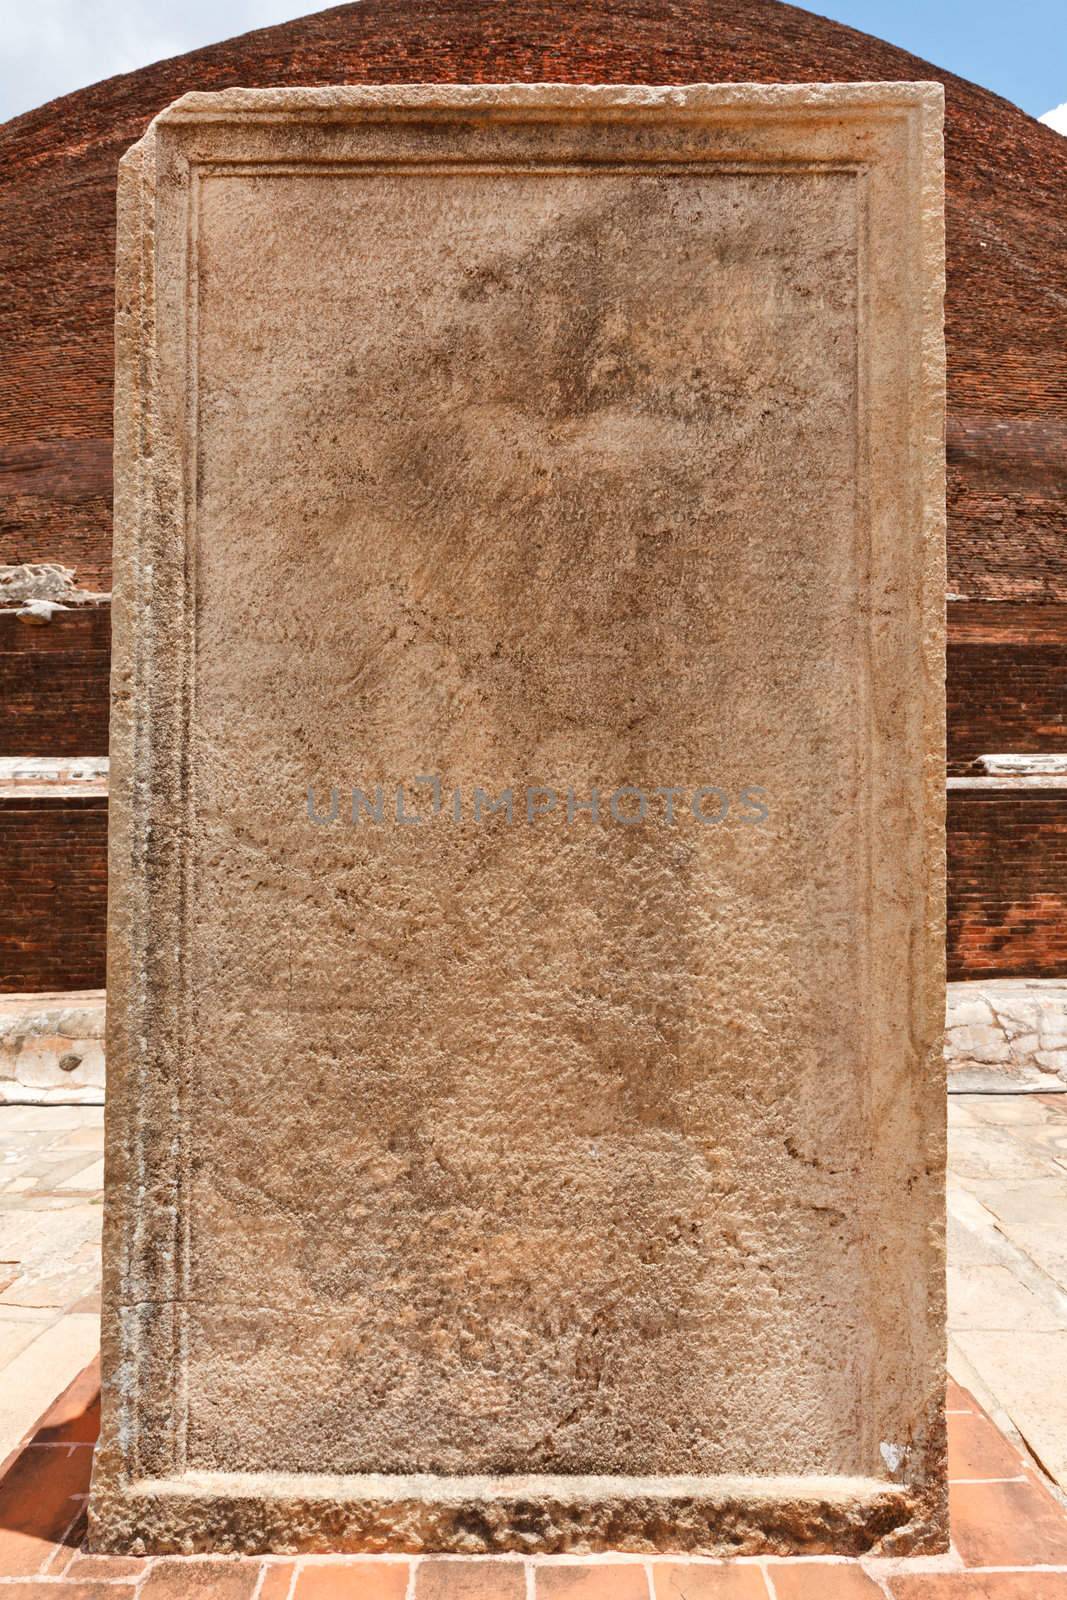 Stone tablet with inscriptions at Jetavaranama dagoba  (stupa). Anuradhapura, Sri Lanka